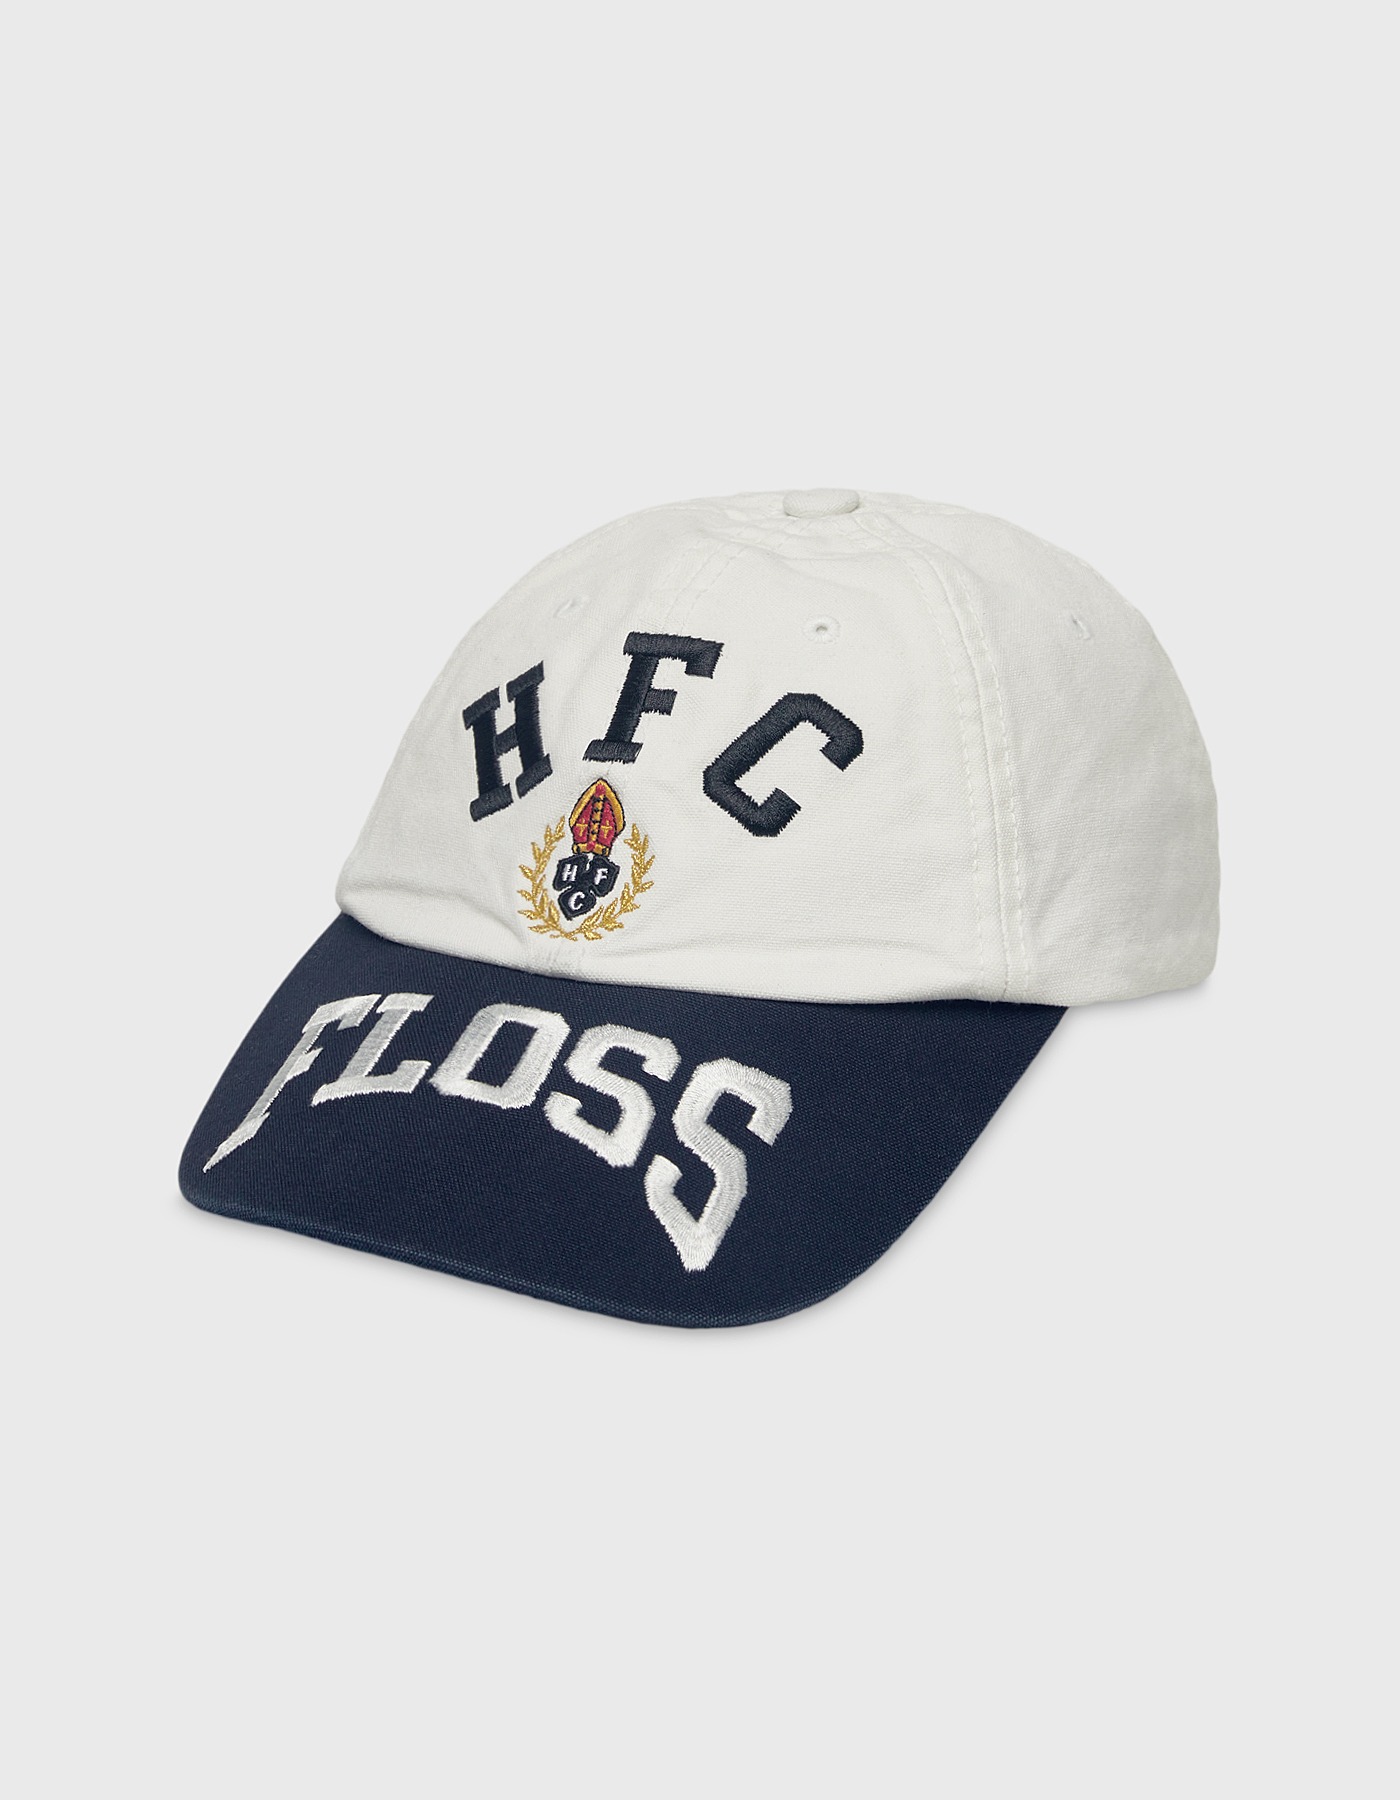 HFC CREST 6 PANEL CAP / White-Navy